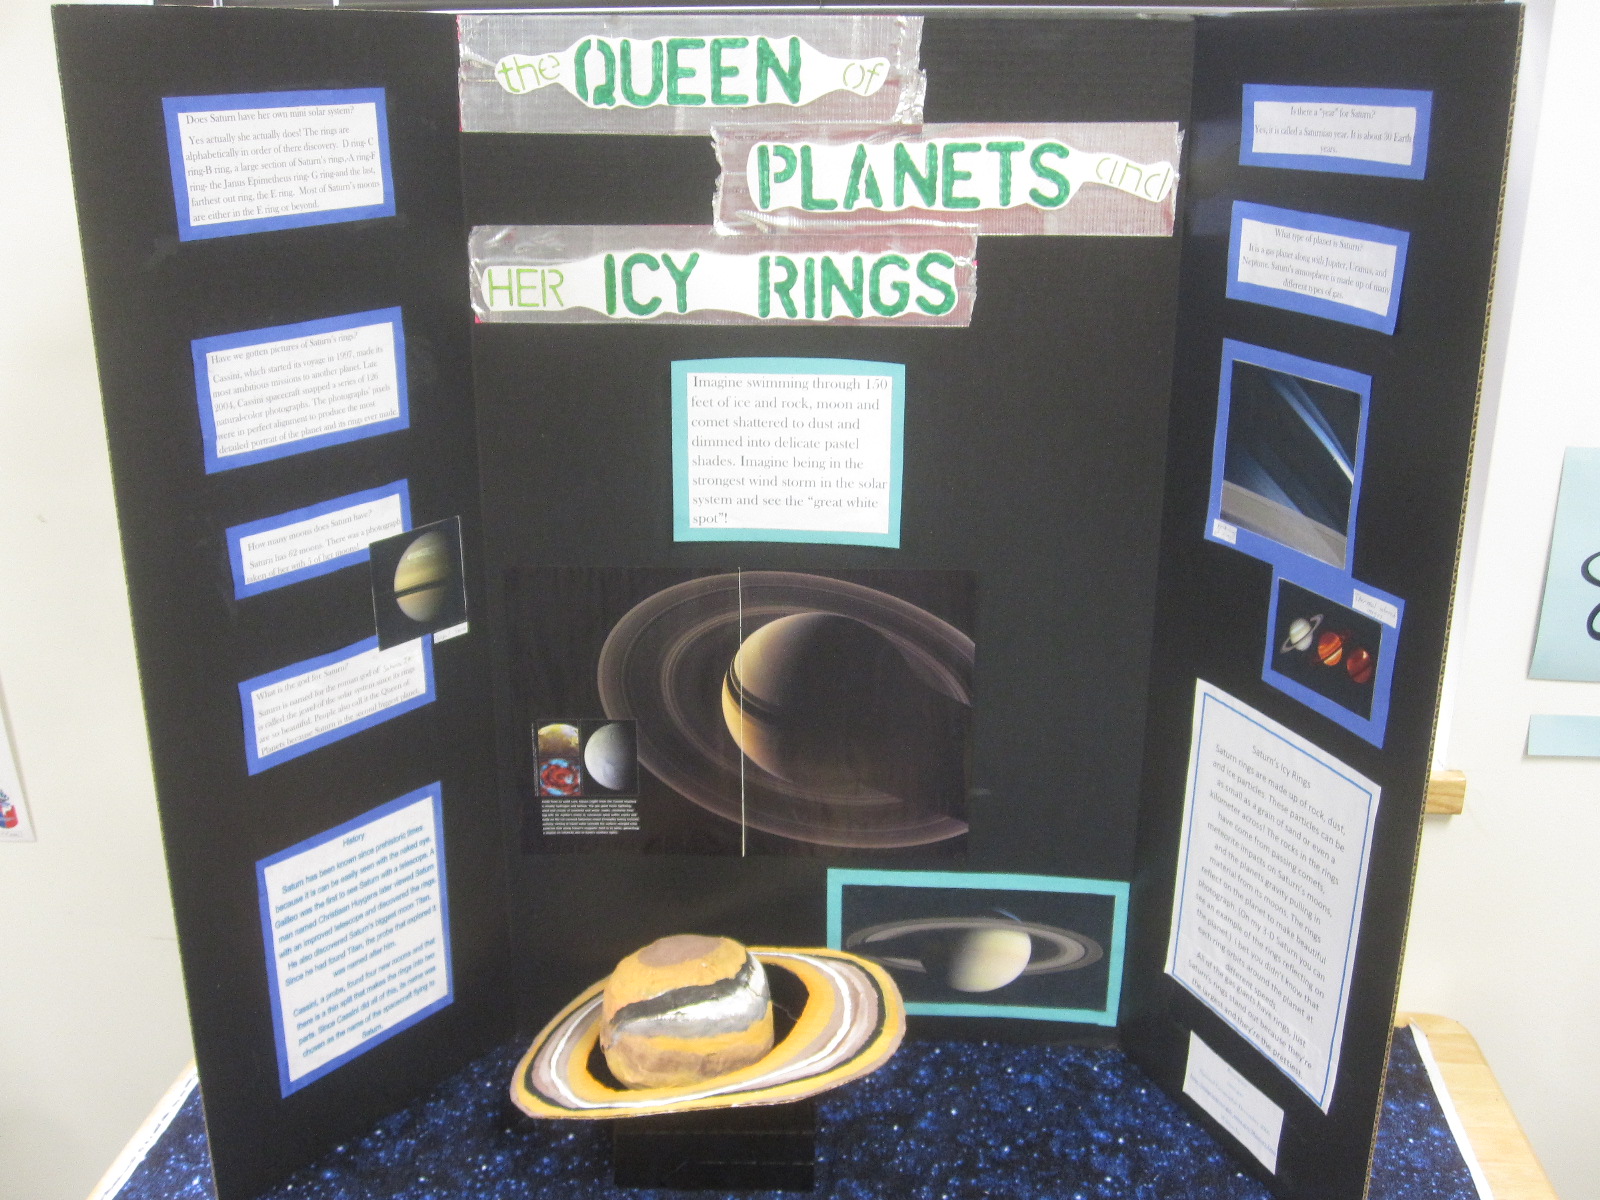 astronomy project topics